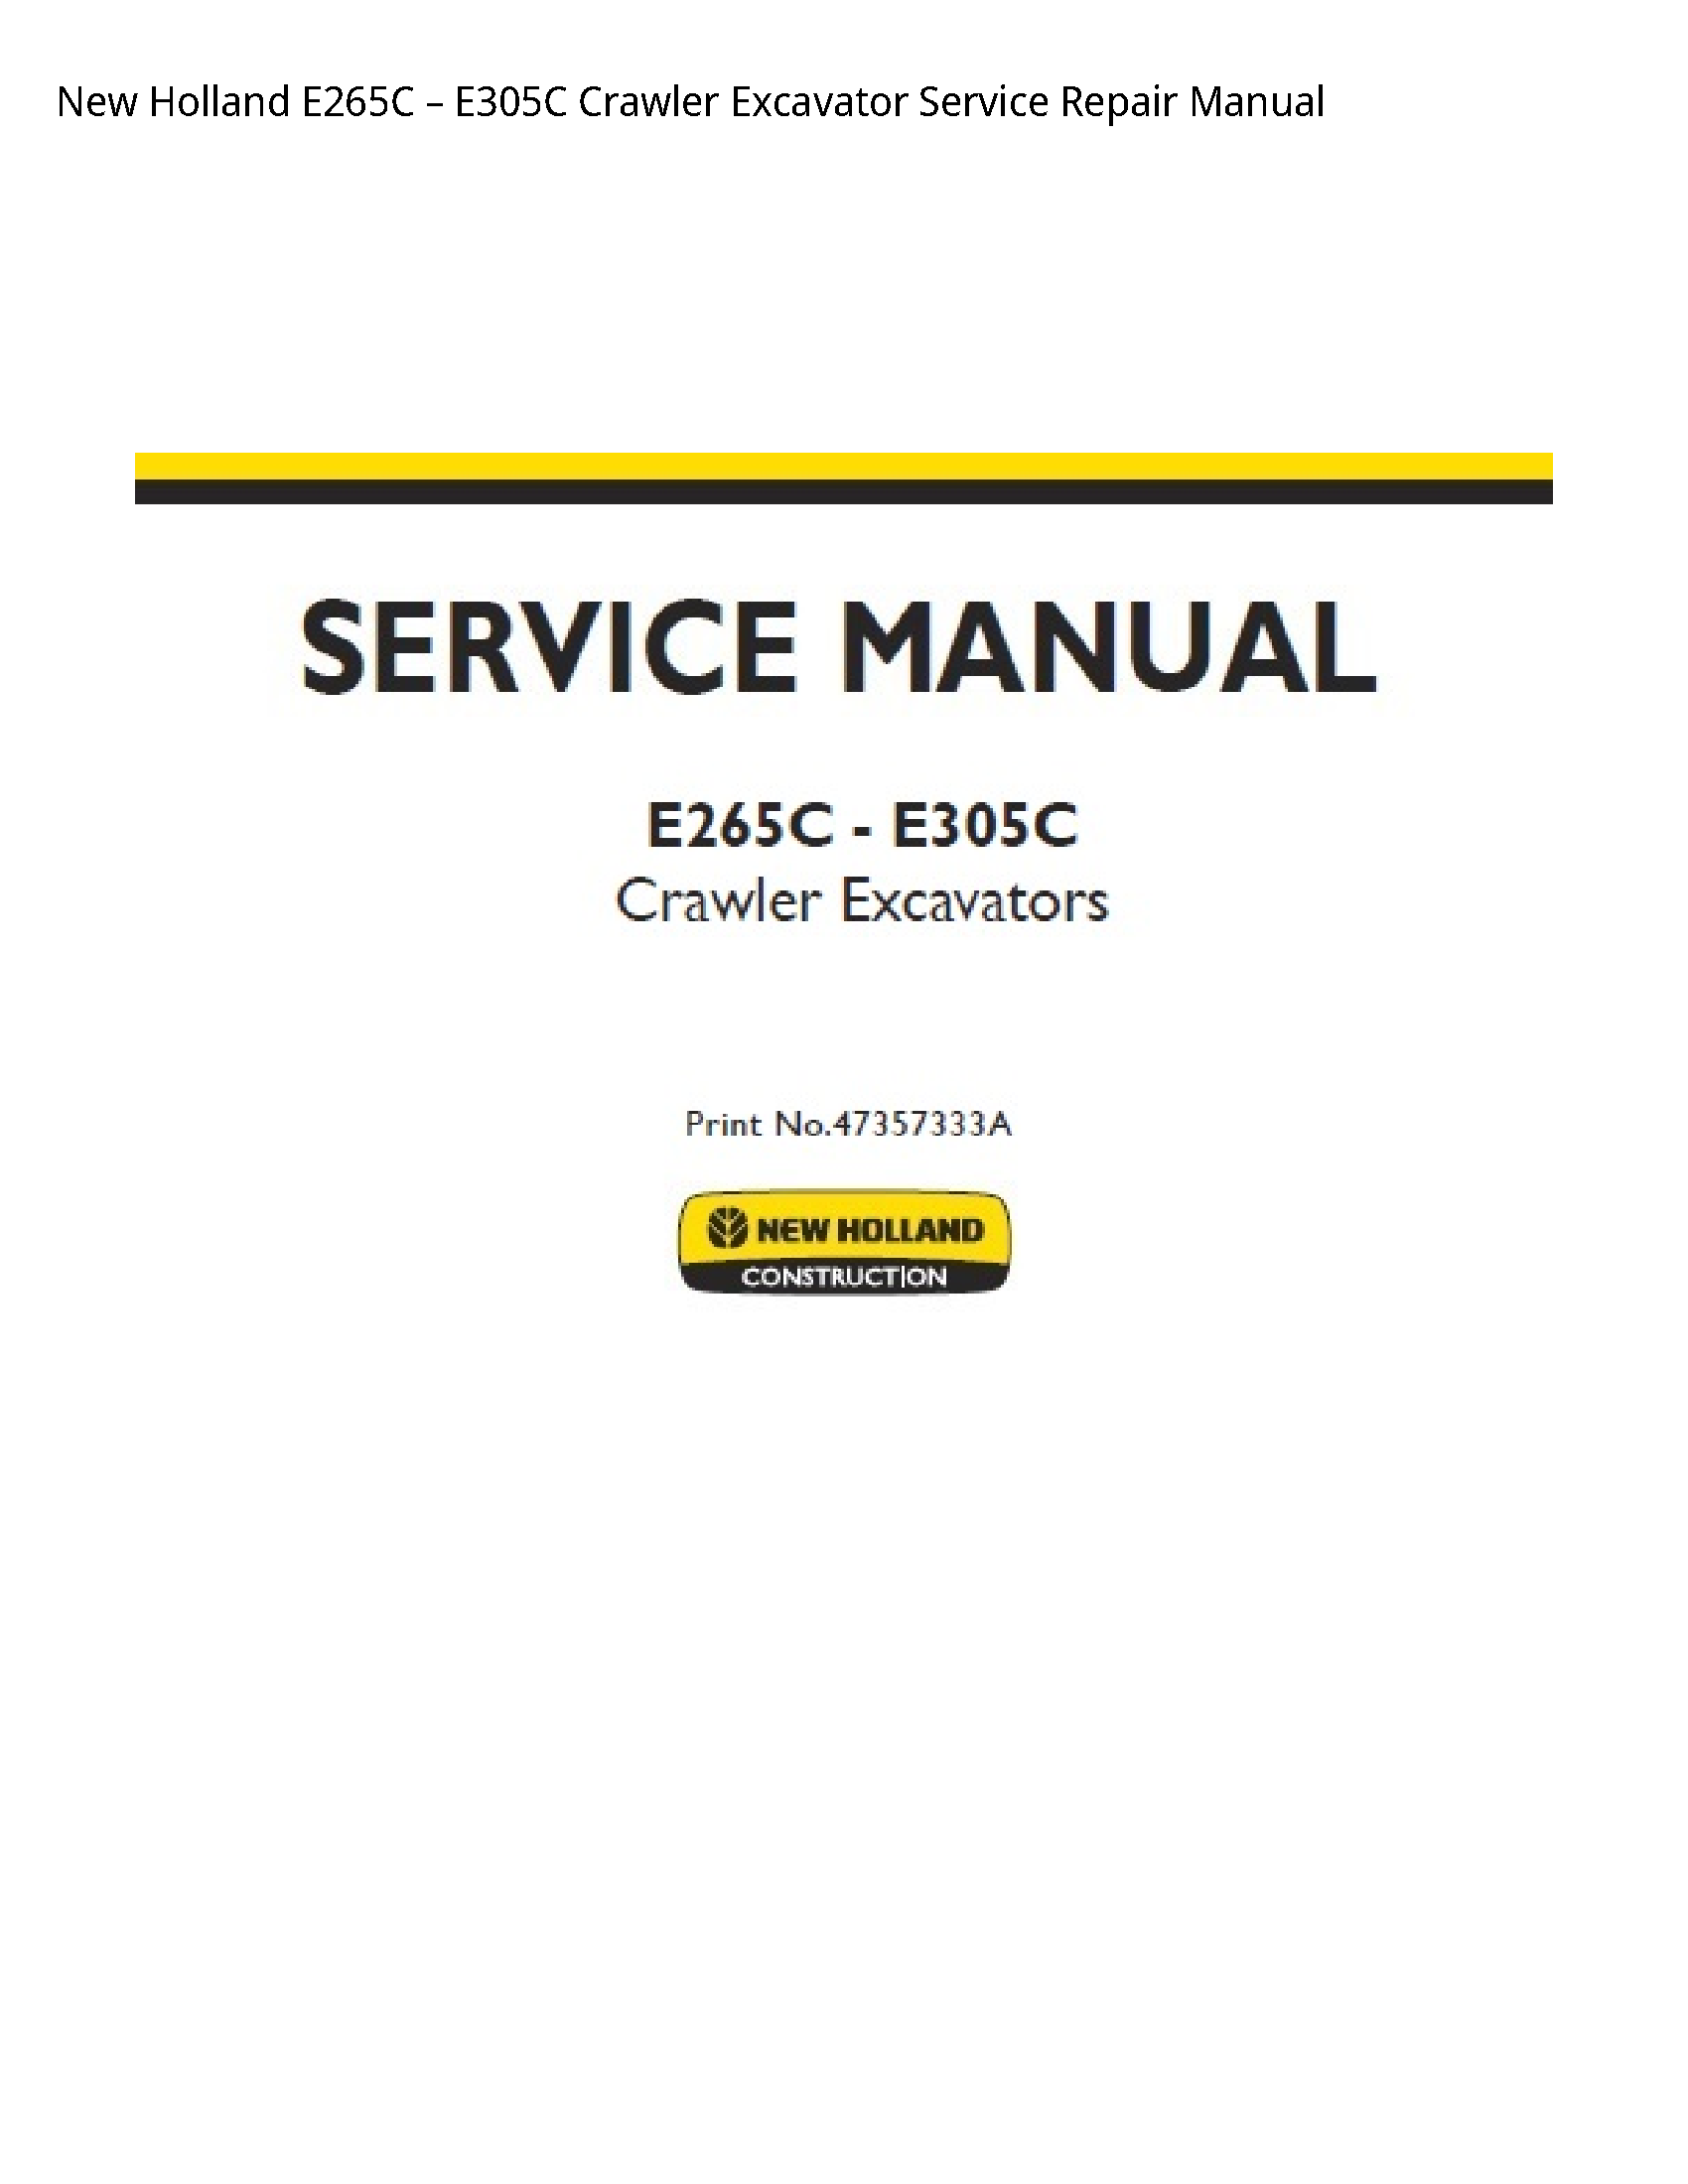 New Holland E265C Crawler Excavator manual